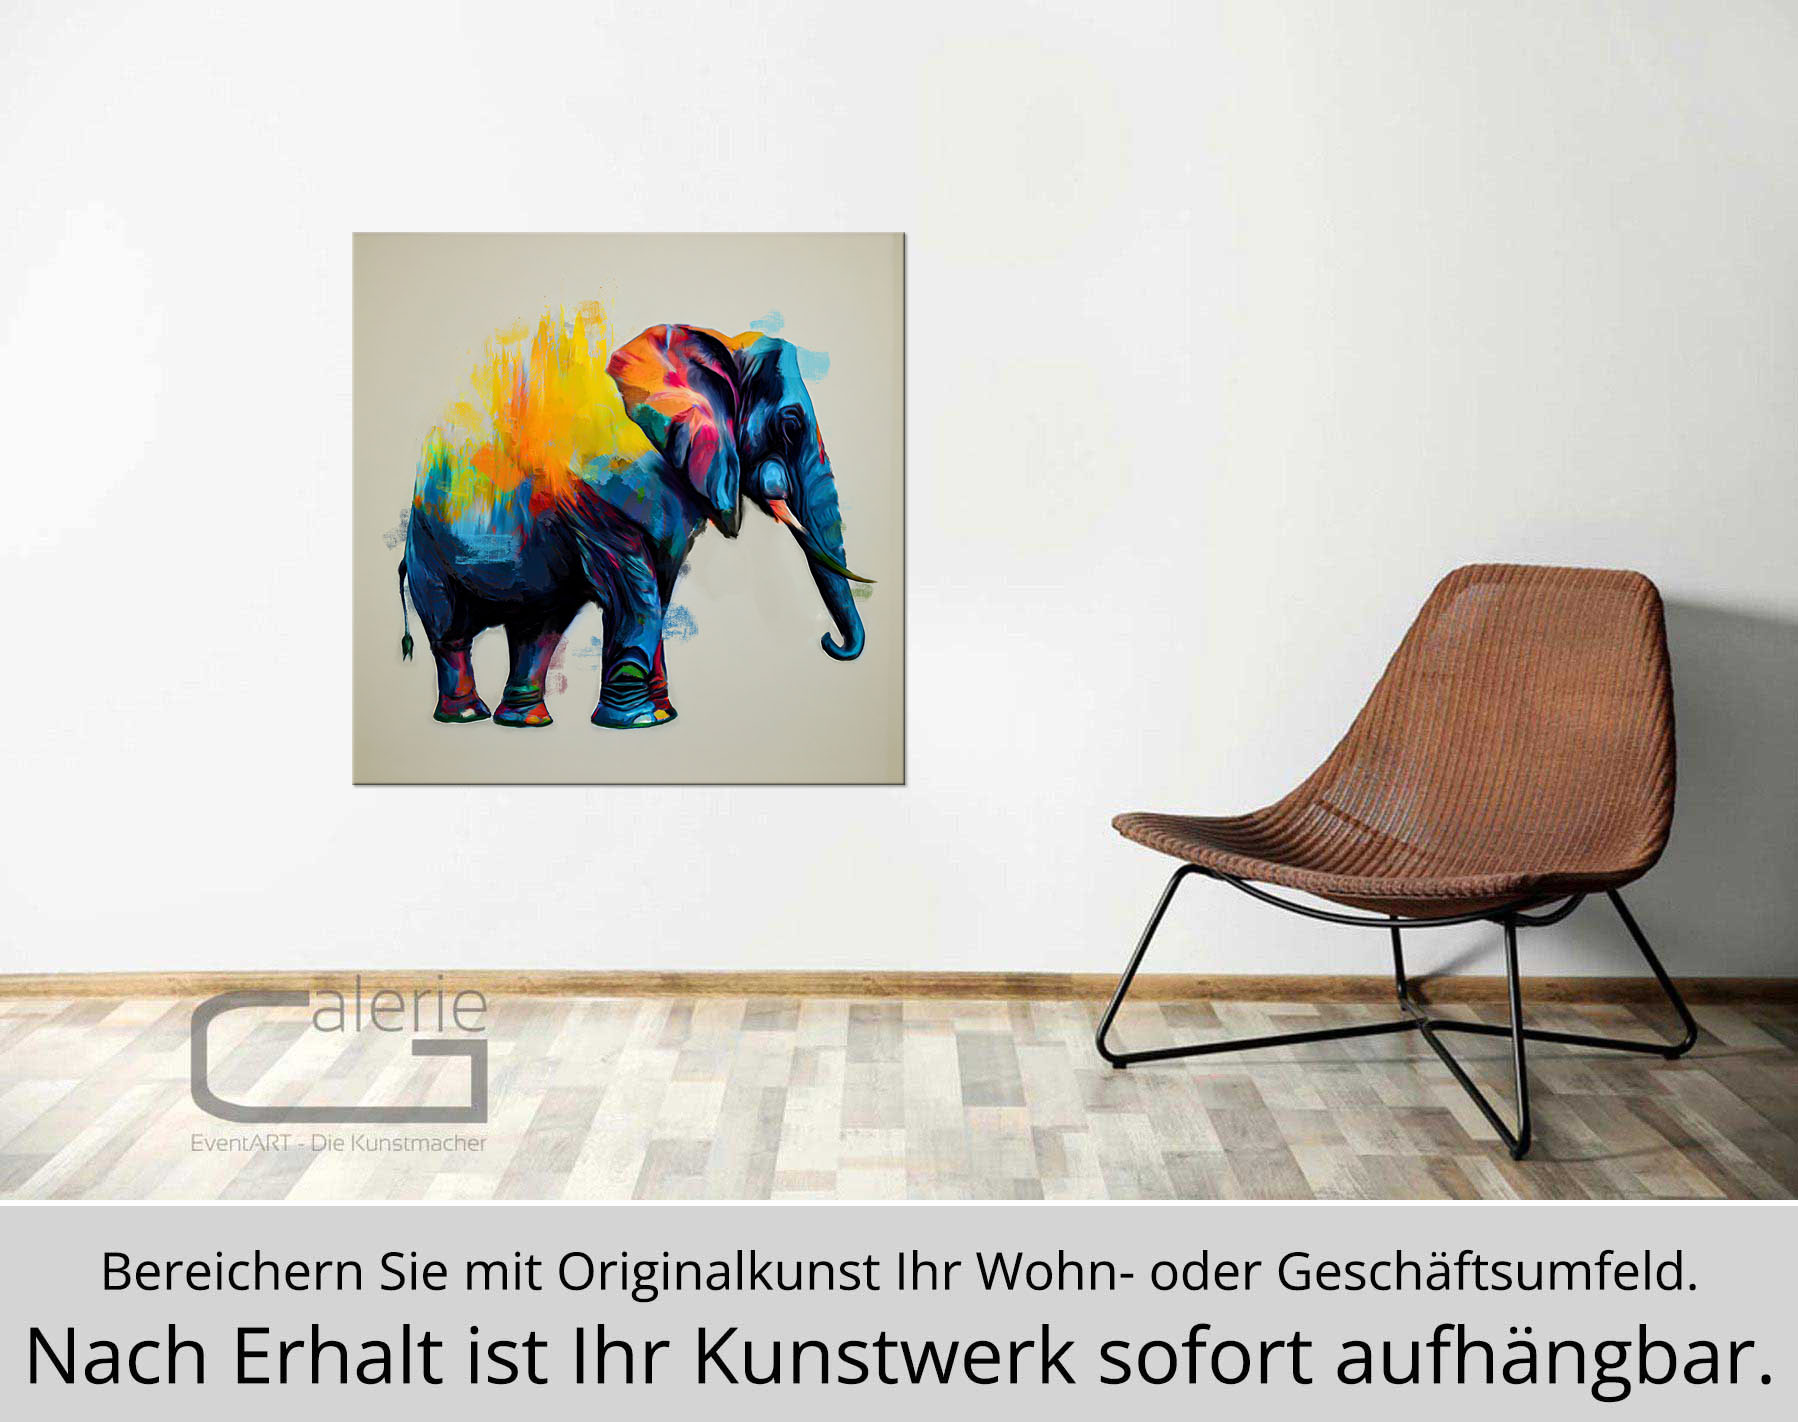 H. Mühlbauer-Gardemin: "Artofant", Moderne Pop Art, Original/serielles Unikat